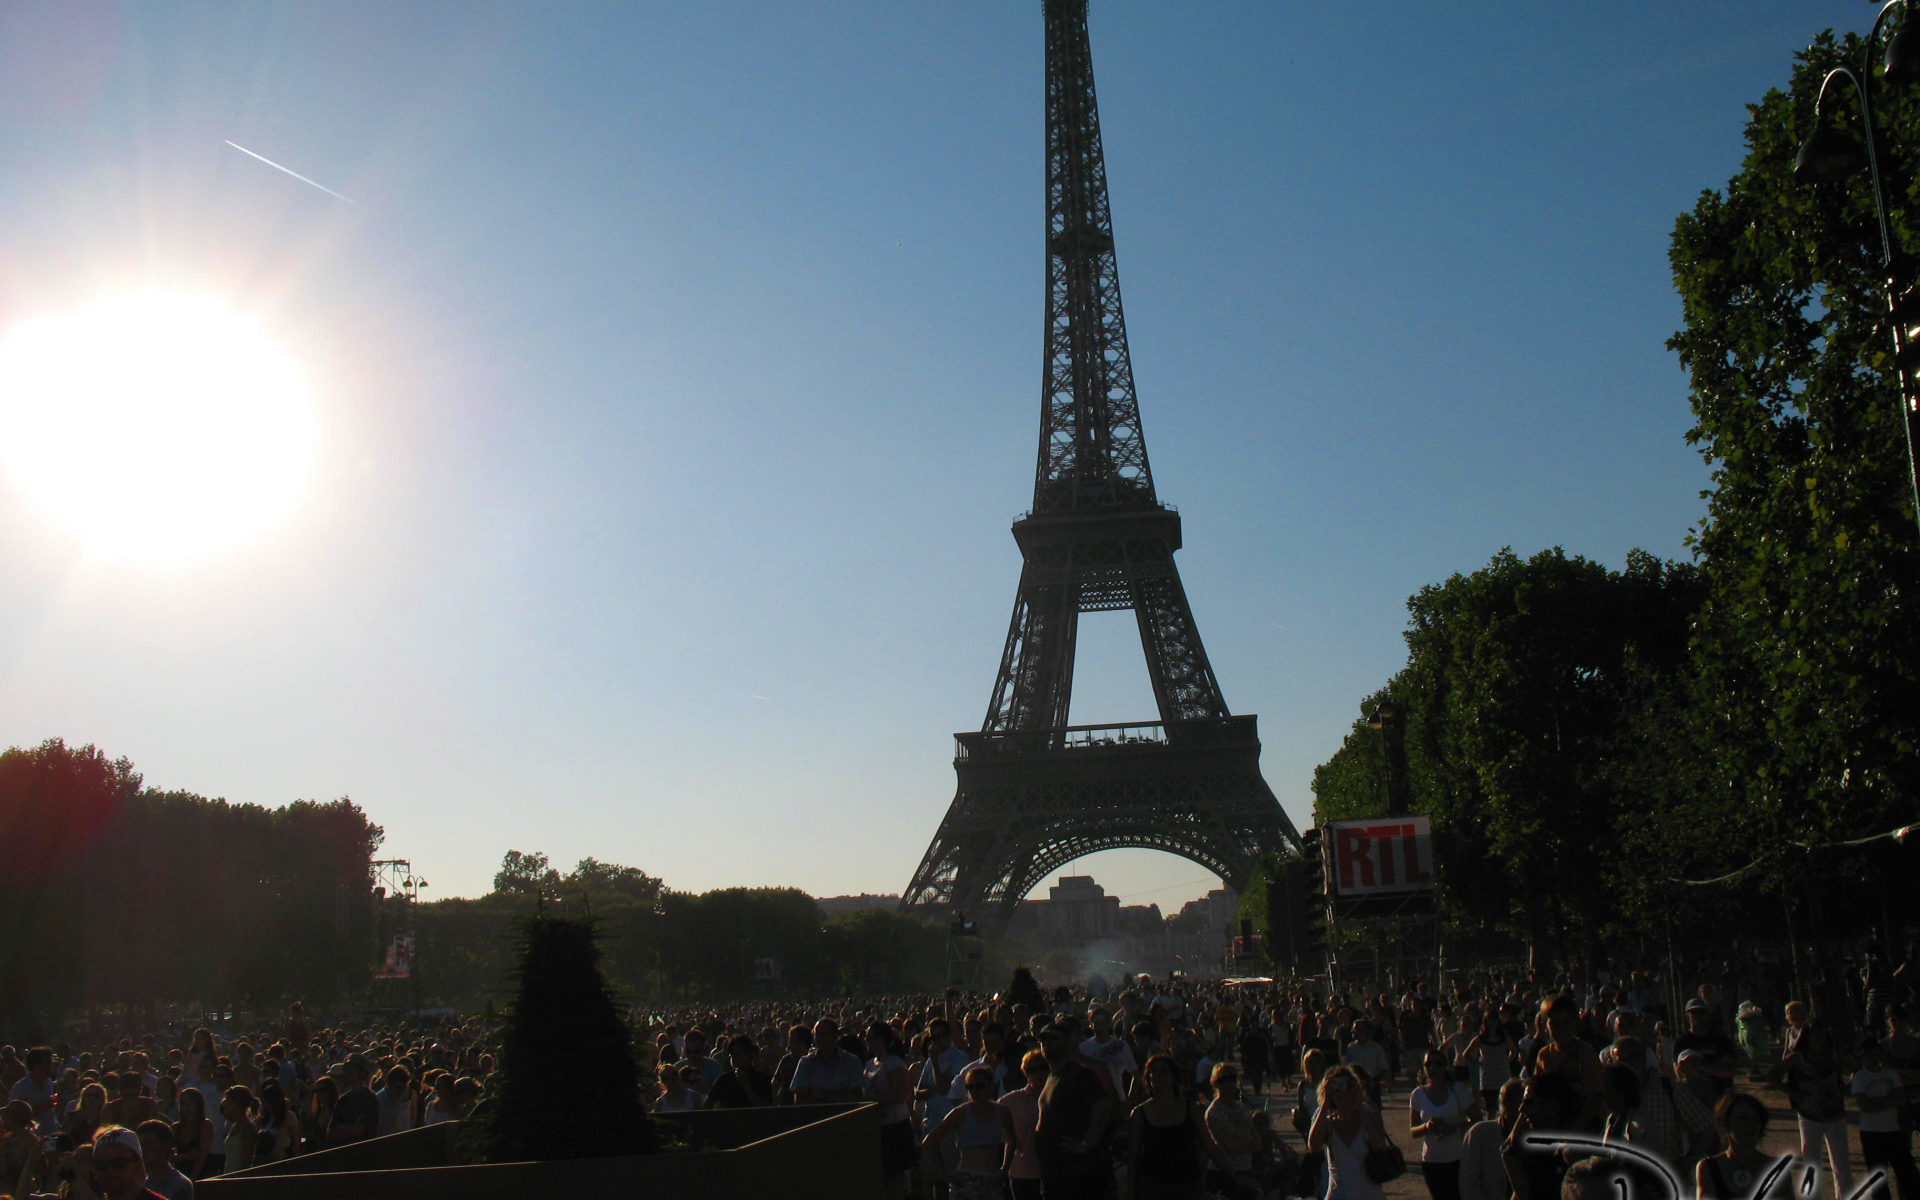 The crowd near the Eiffel Tower